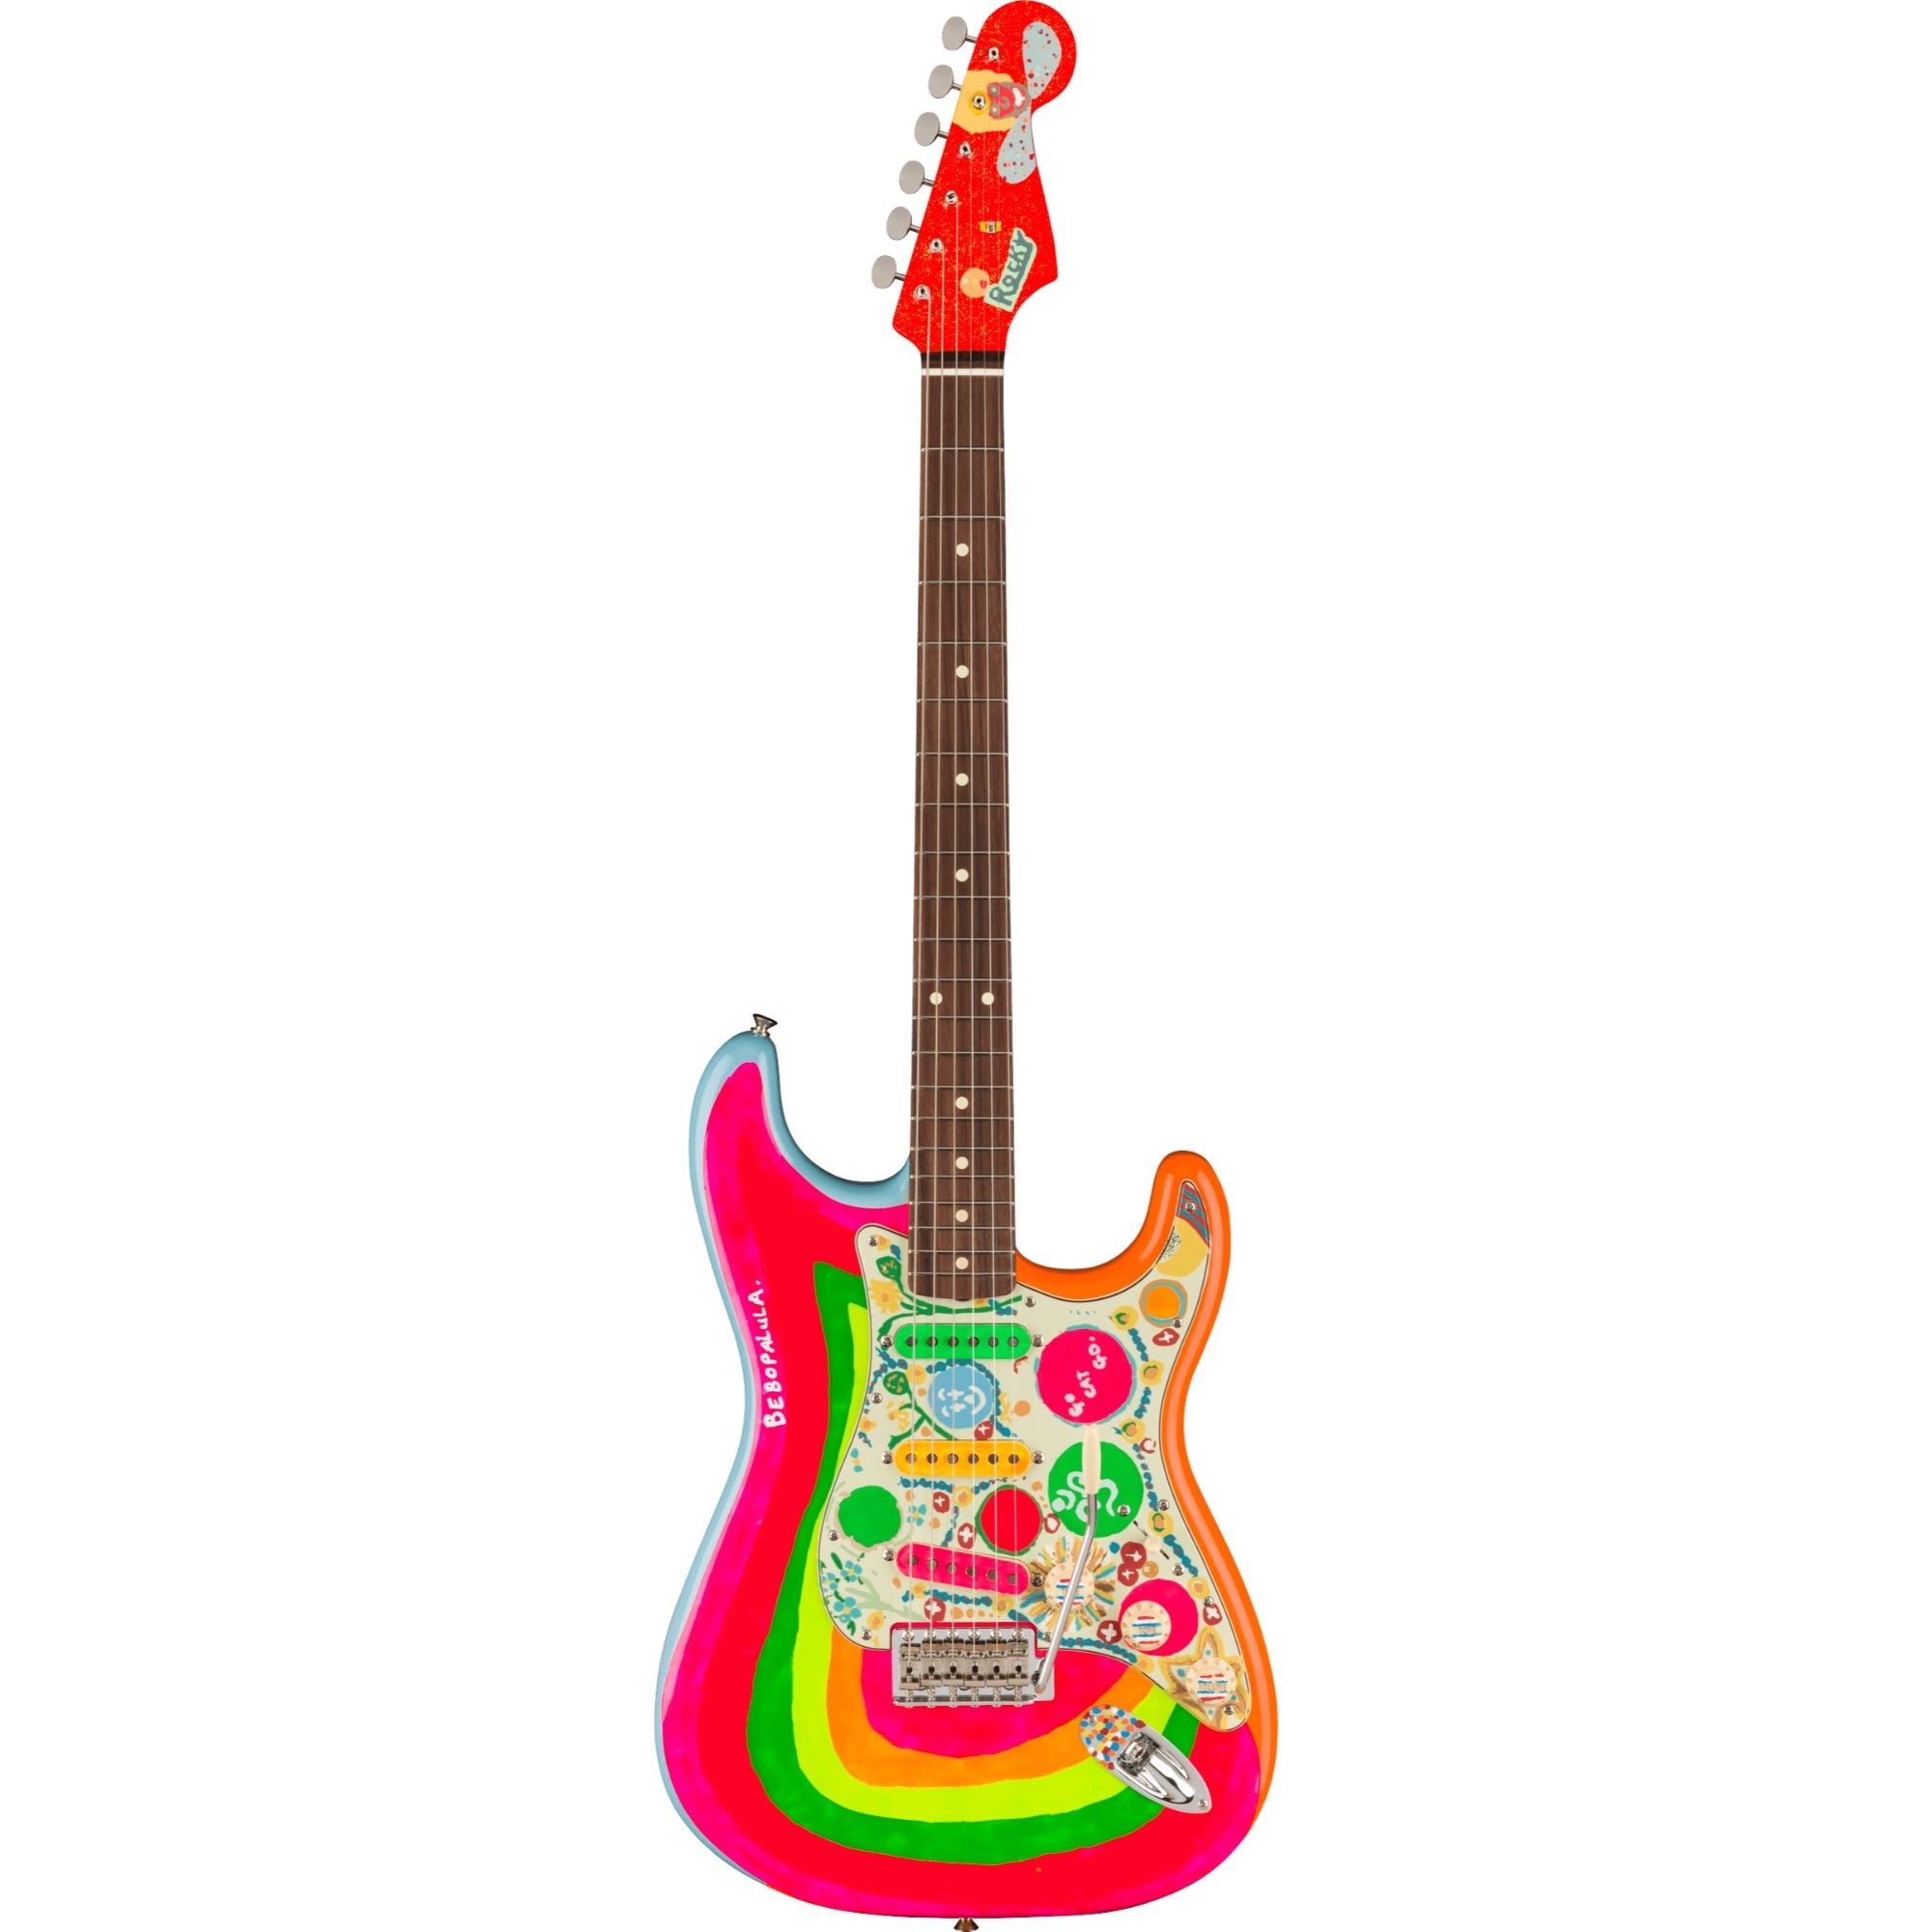 Fender George Harrison Rocky Stratocaster incl Case